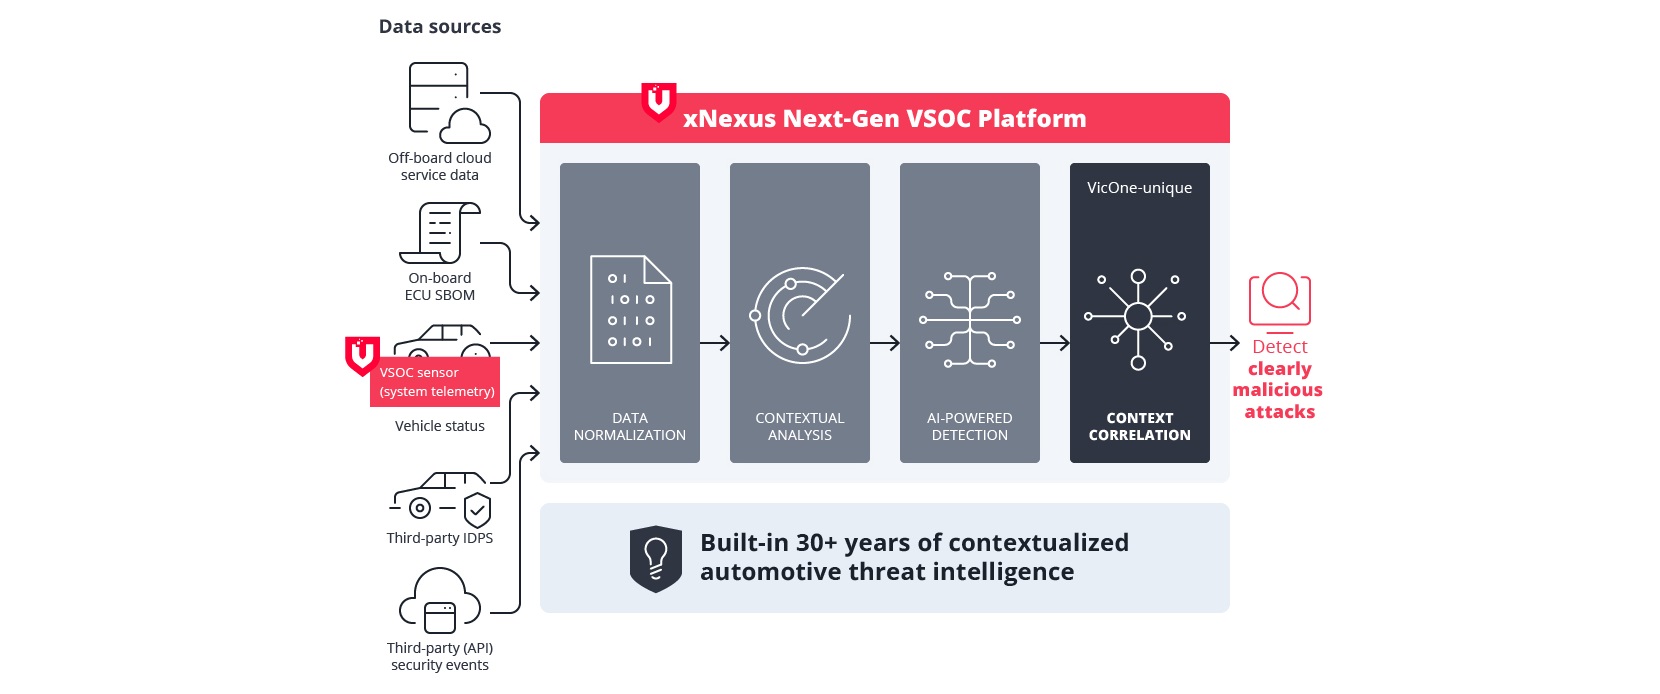 VicOne unveils xNexus vehicle security platform